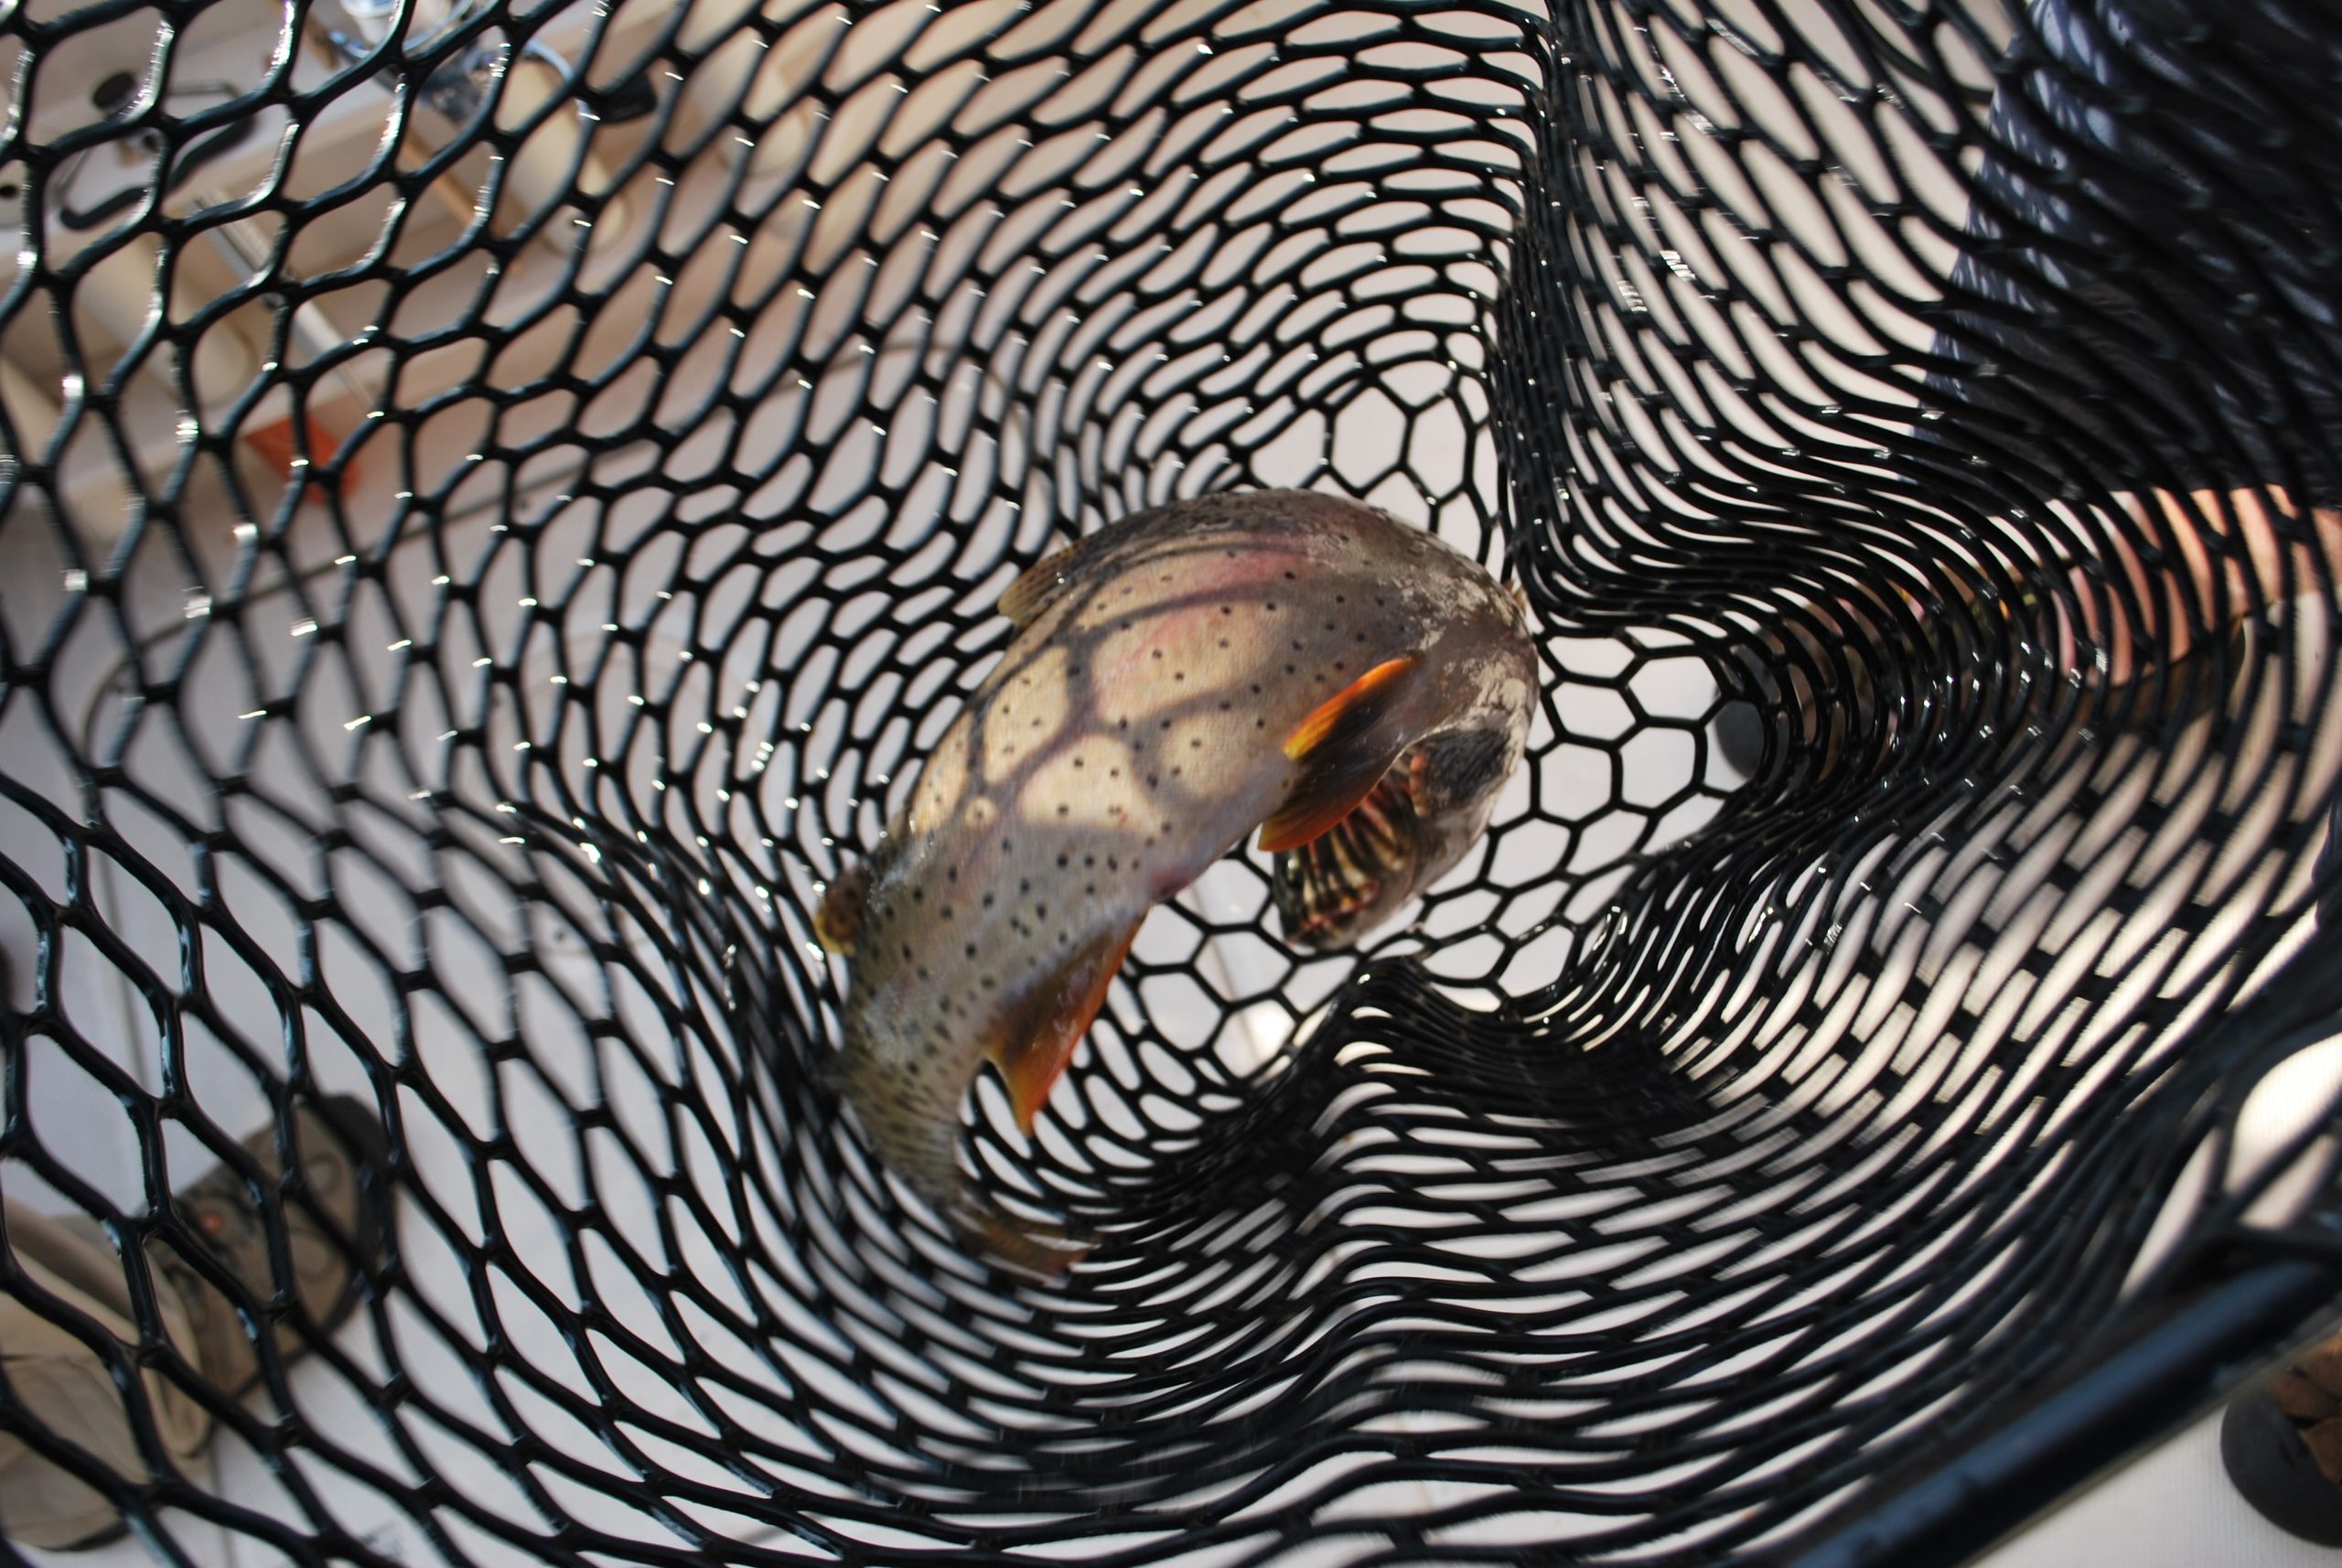 Fish caught in bottom of net